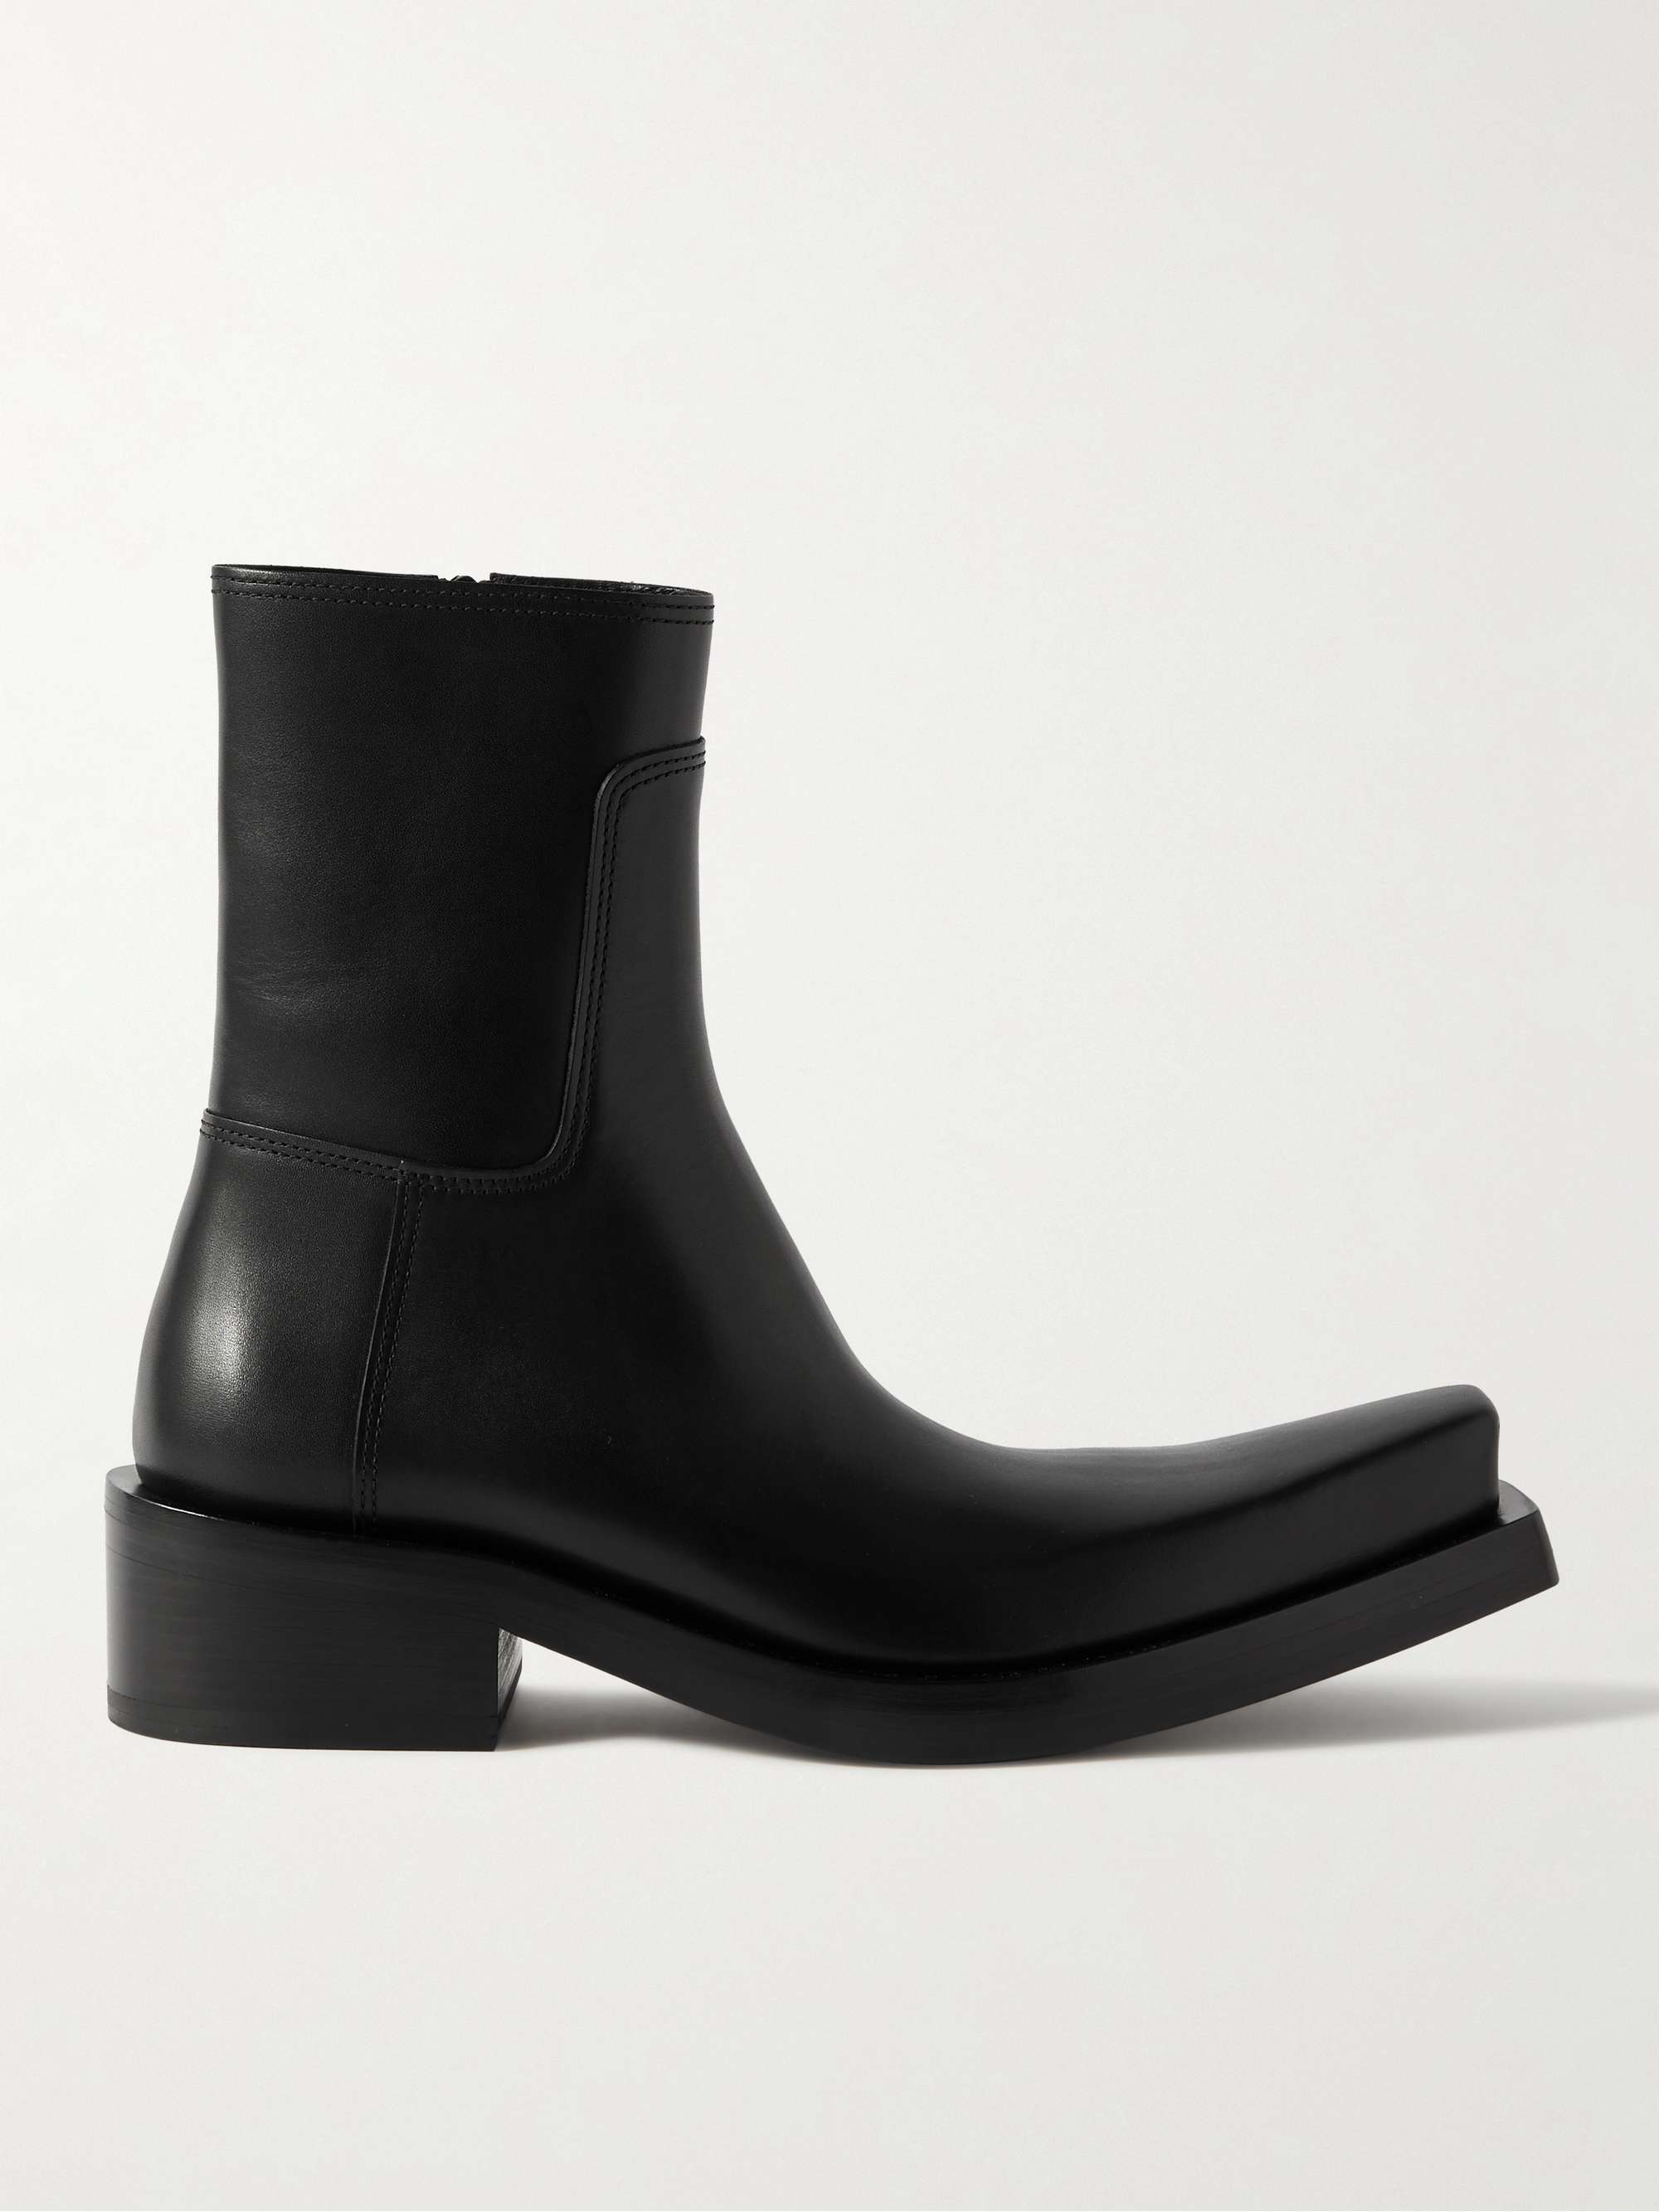 Strike Leather Boots in Black  Balenciaga  Mytheresa